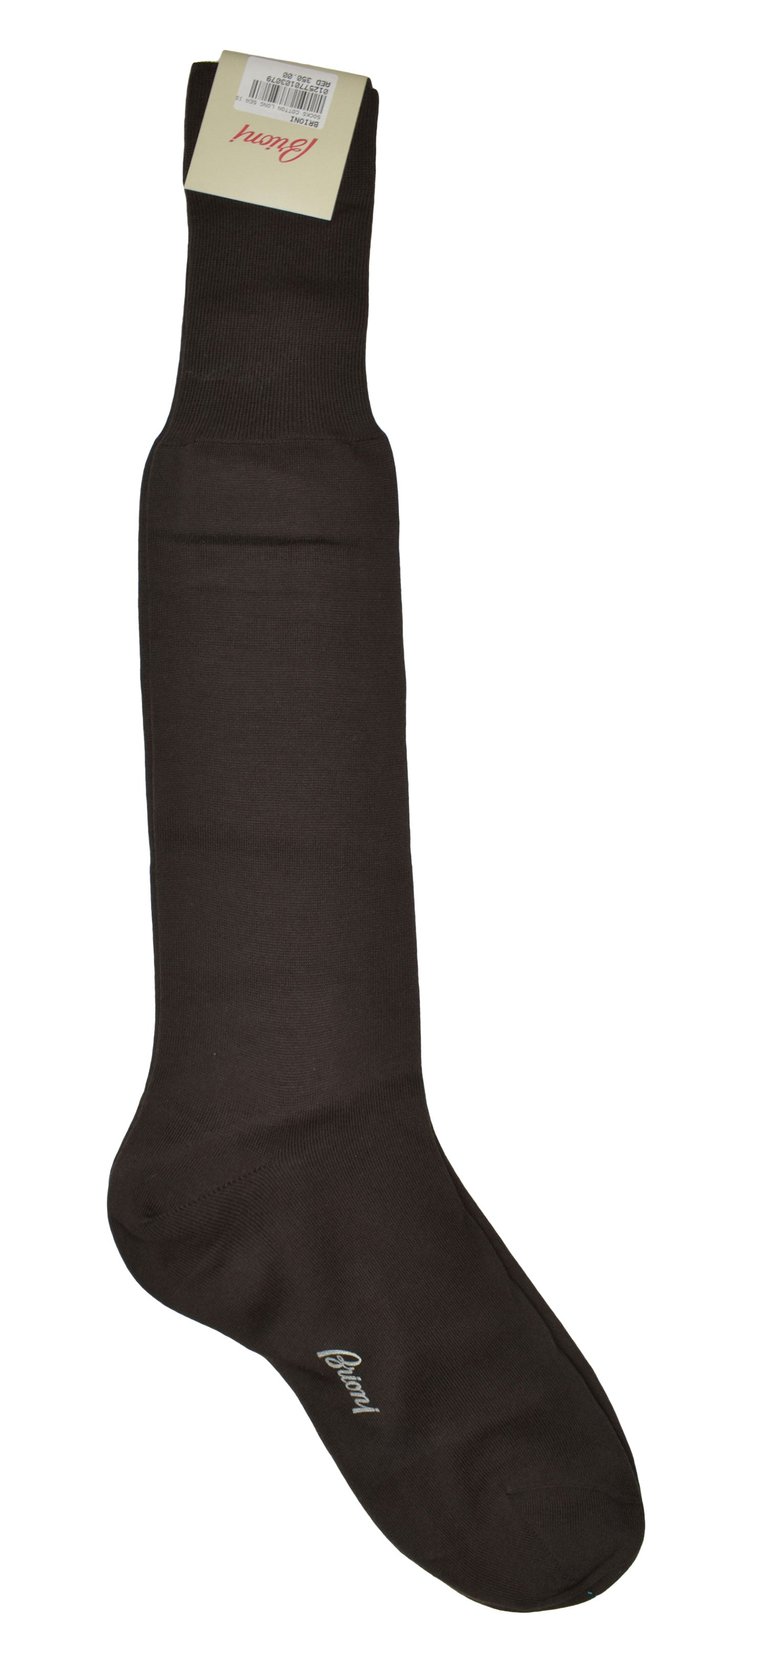 Men's 100% Cotton Dark Brown Long Socks - Brown